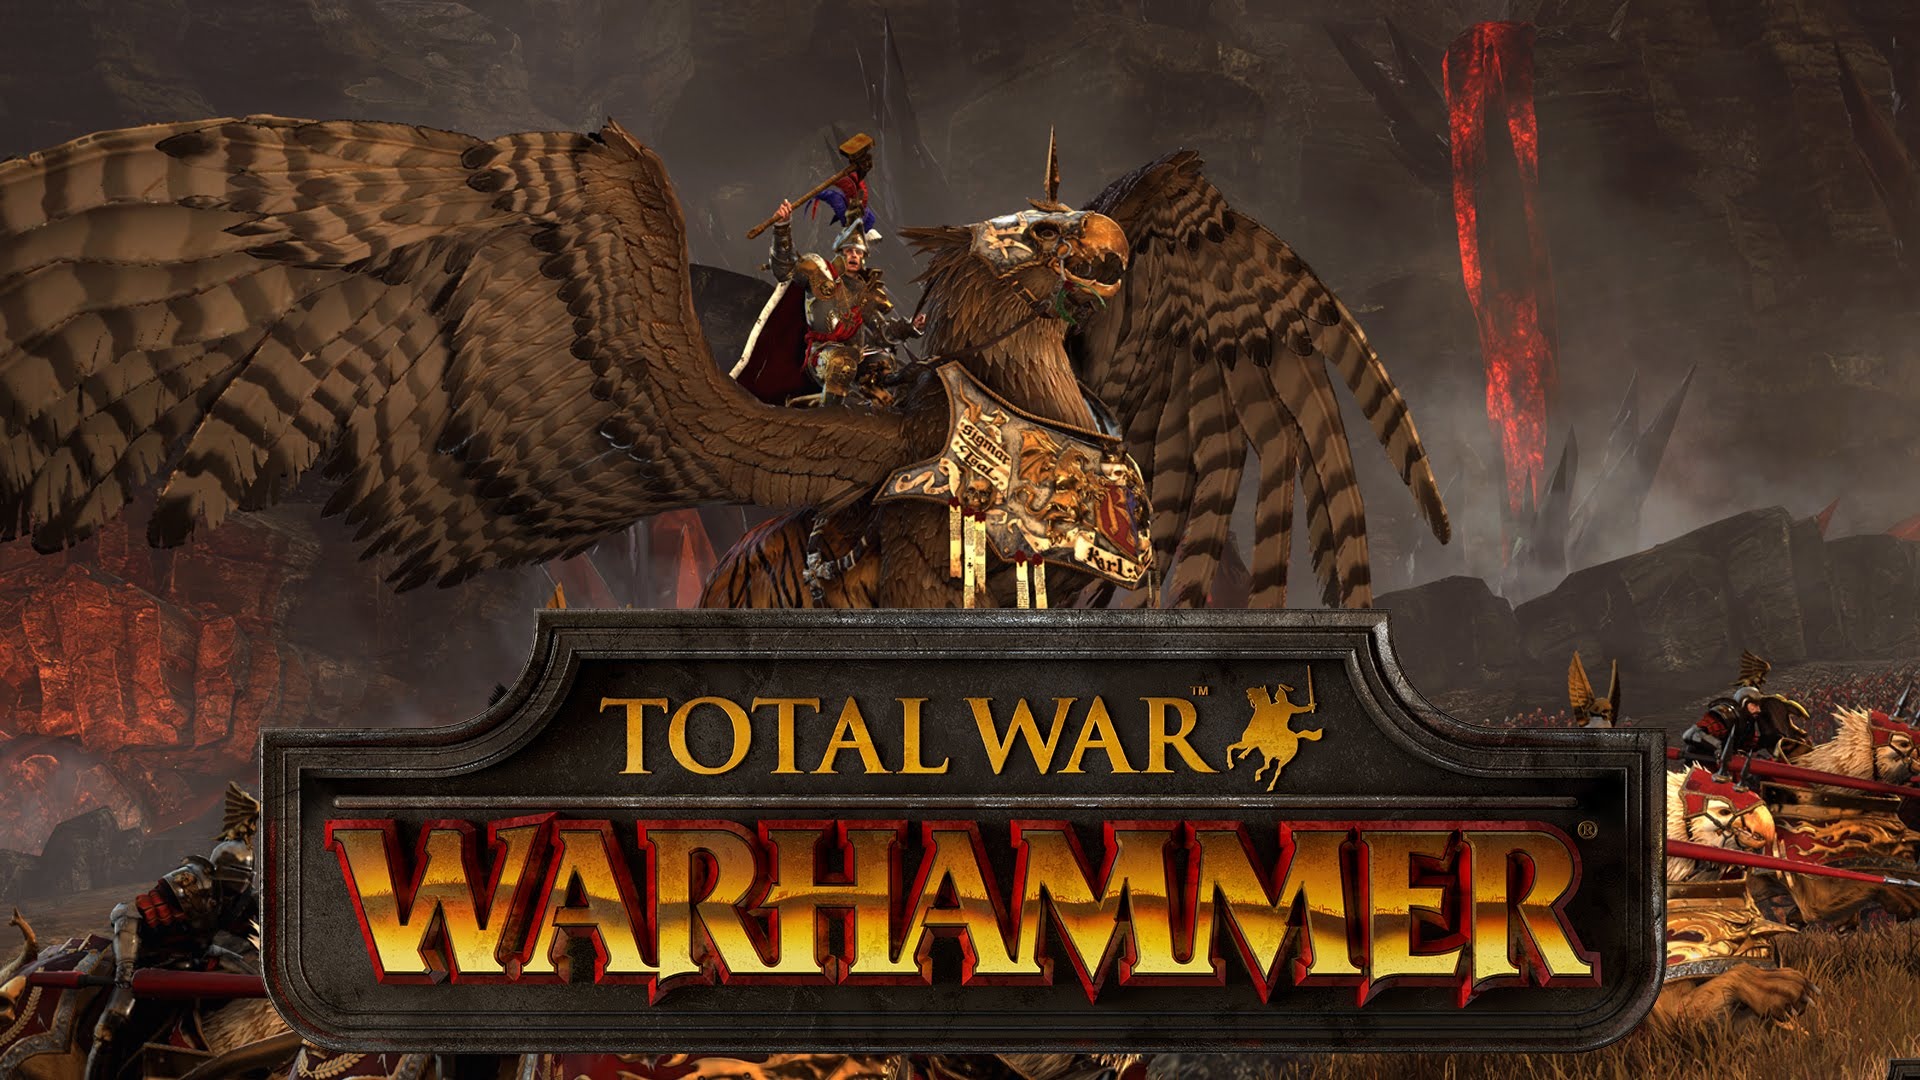 Total War Warhammer レビュー 伝統ストラテジーとファンタジーの融合 Game Spark 国内 海外ゲーム情報サイト